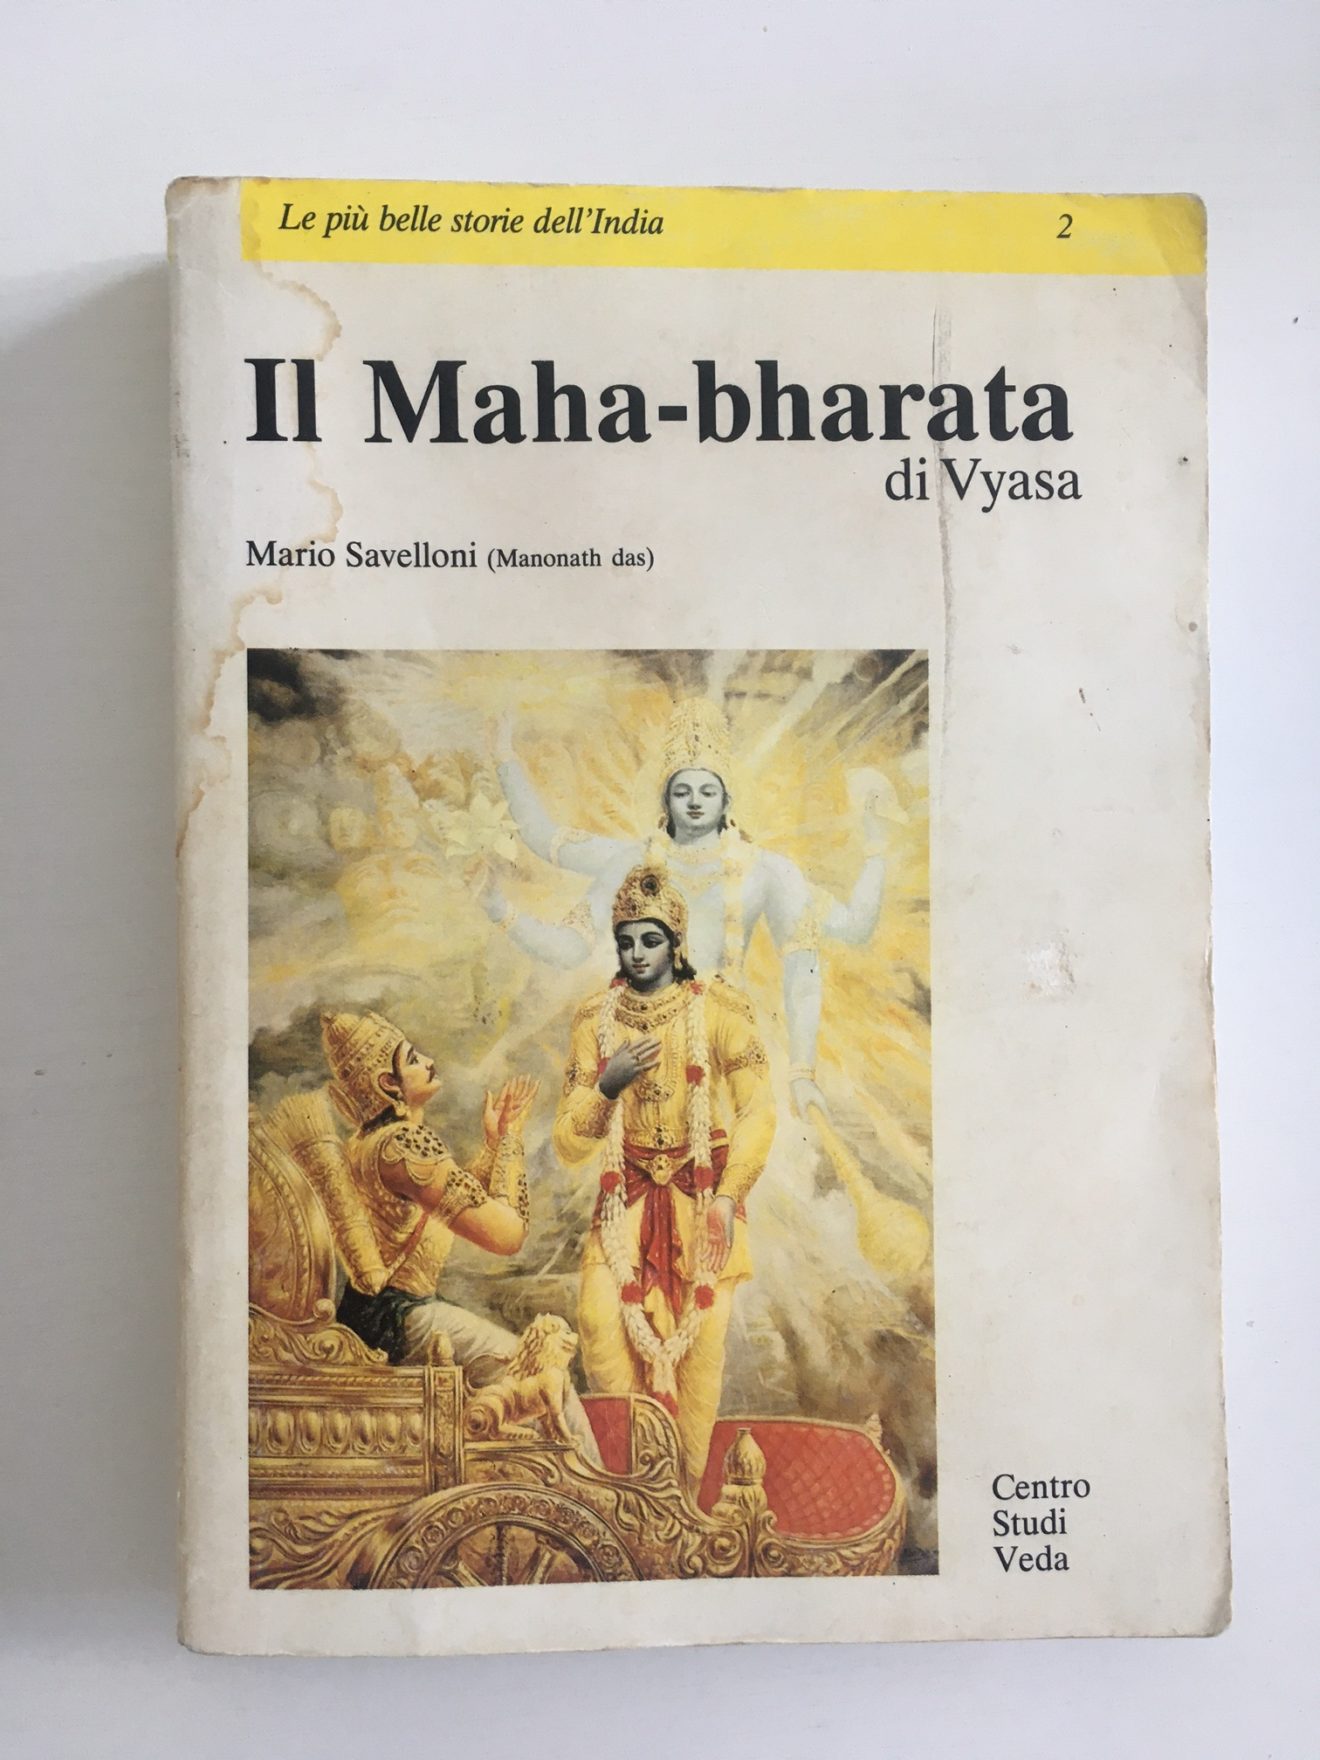 Copertina del Maha-bharata in Italiano originale, 1992